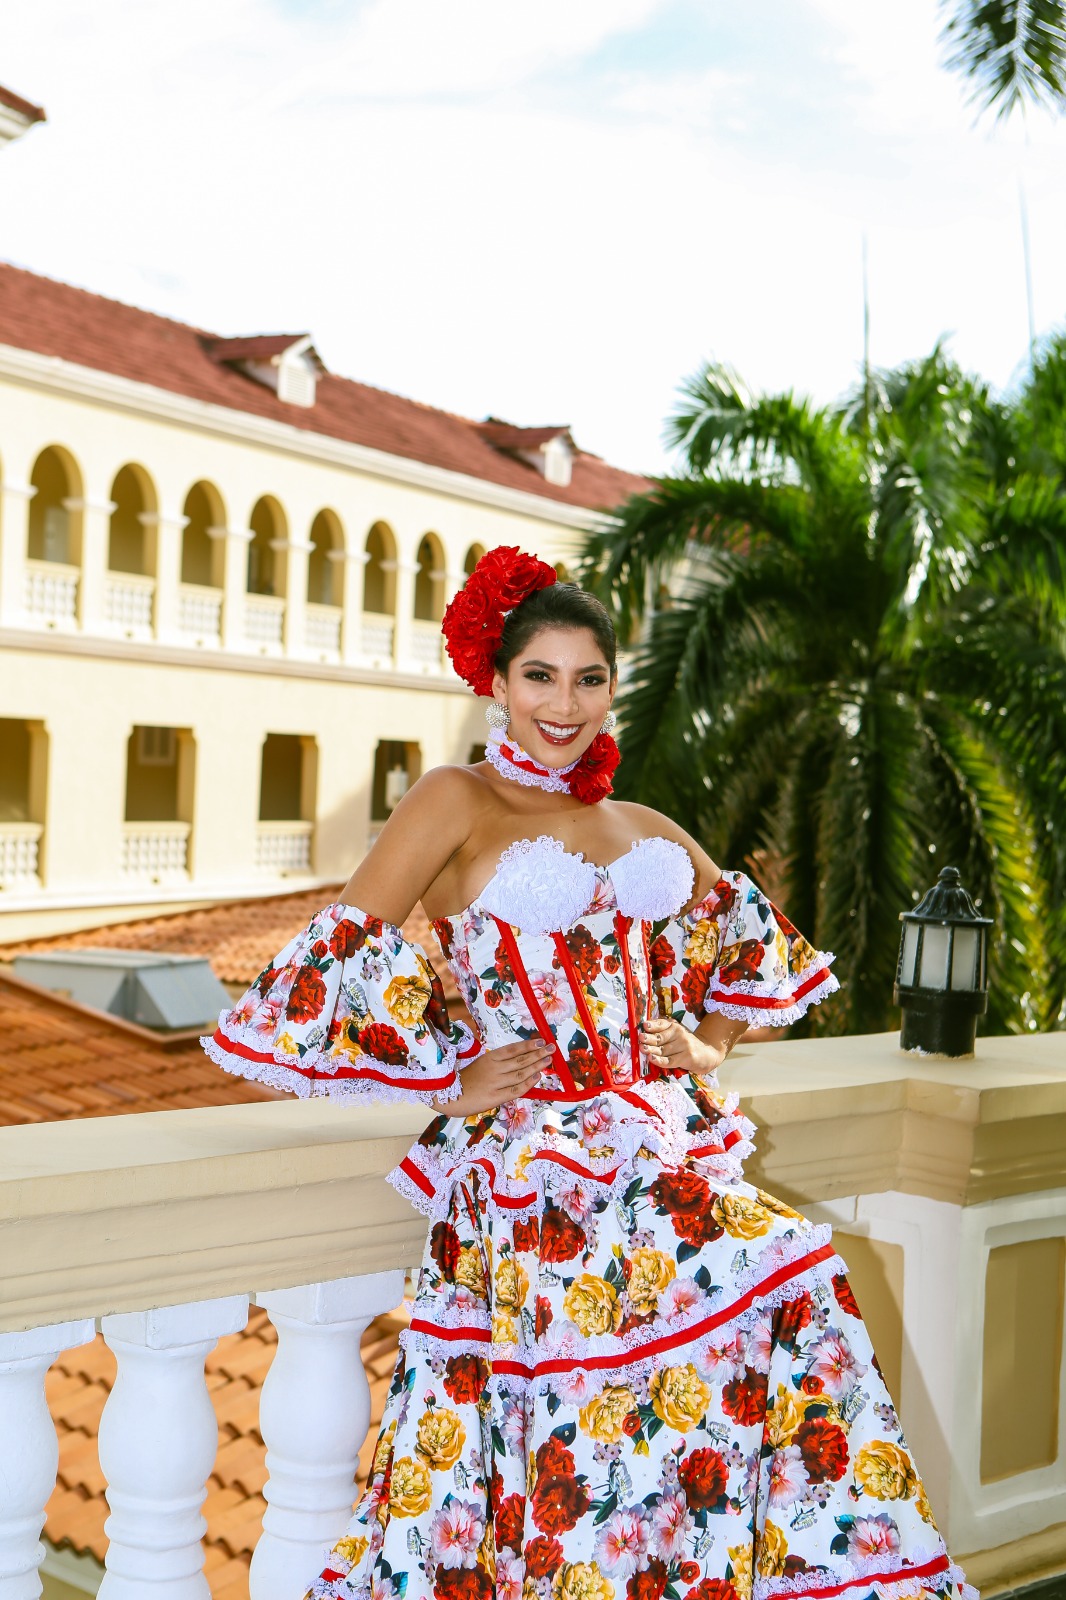 La Reina del Carnaval de la 44, Natalya Ruiz